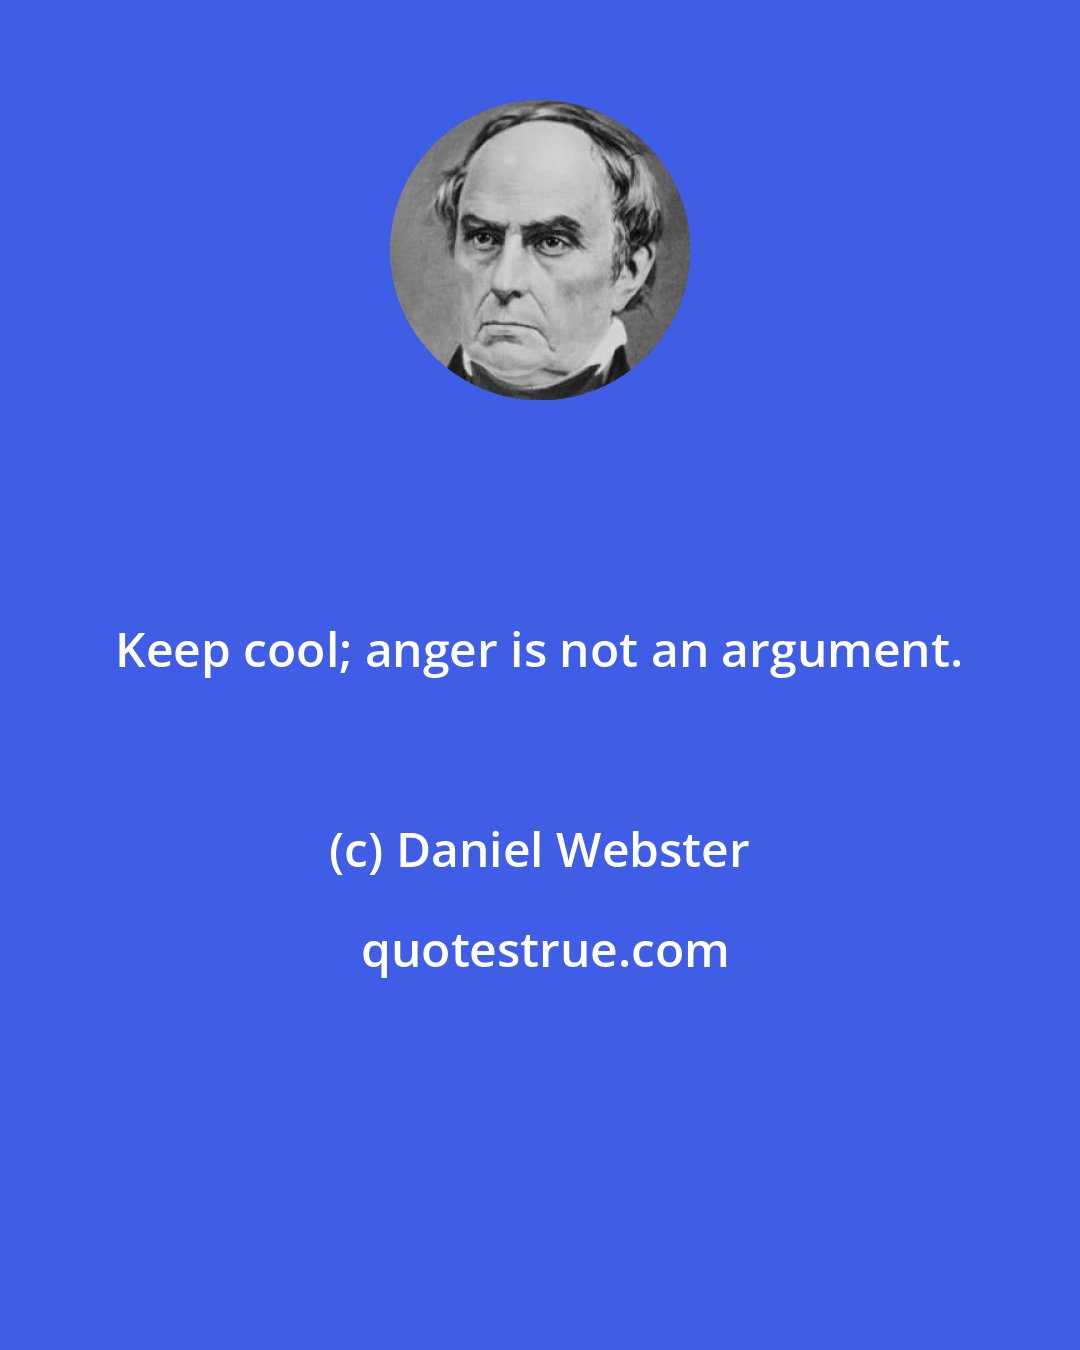 Daniel Webster: Keep cool; anger is not an argument.